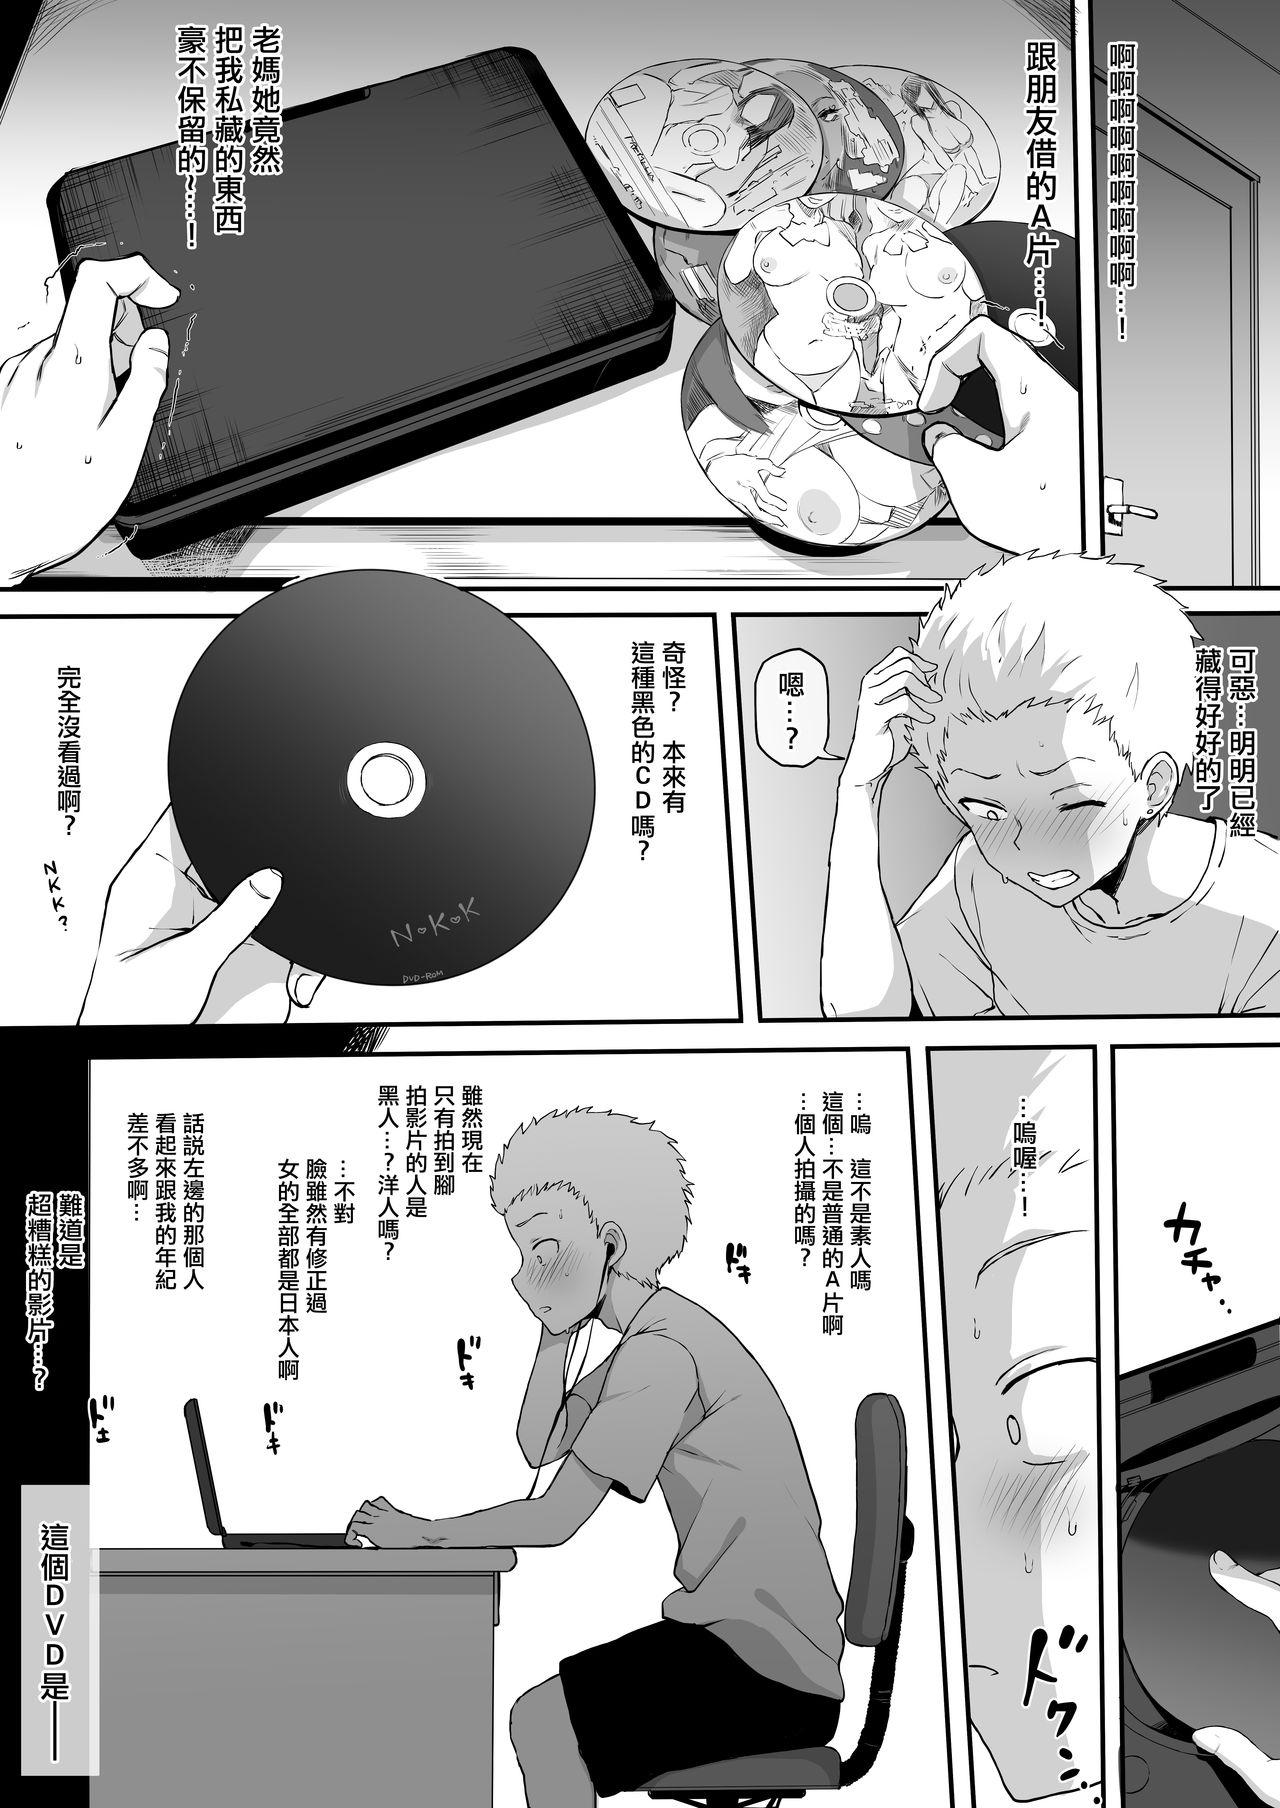 Kokujin no Tenkousei NTR ru Chapters 1-6 part 1 Plus Bonus chapter: Stolen Mother’s Breasts 24